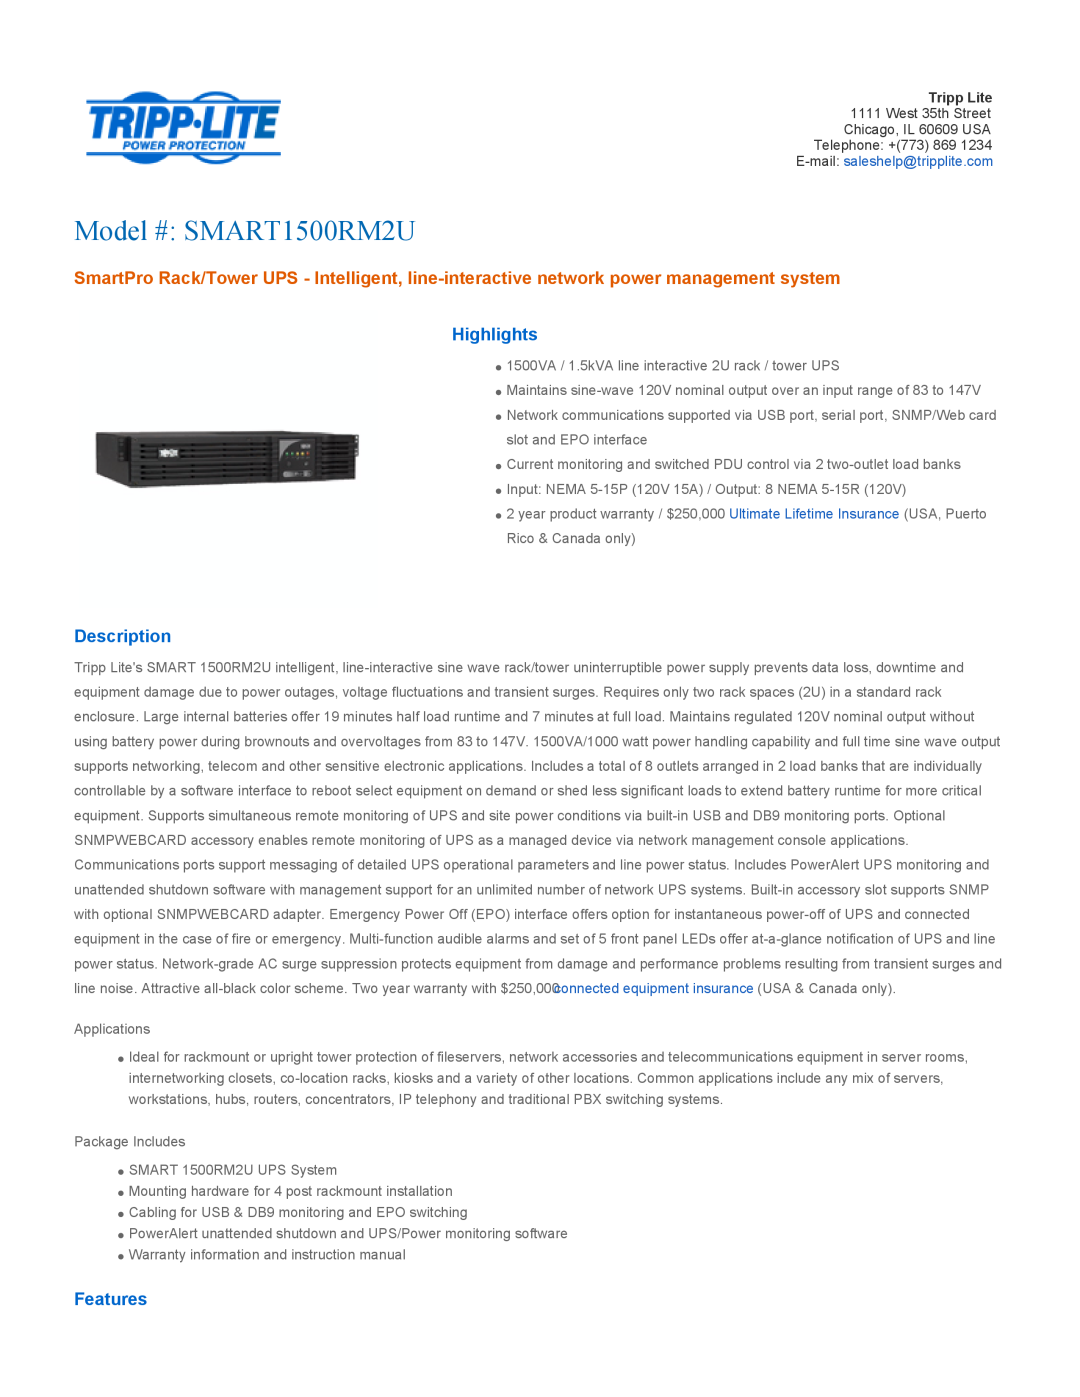 Tripp Lite warranty Highlights, Description, Features, Model # SMART1500RM2U 